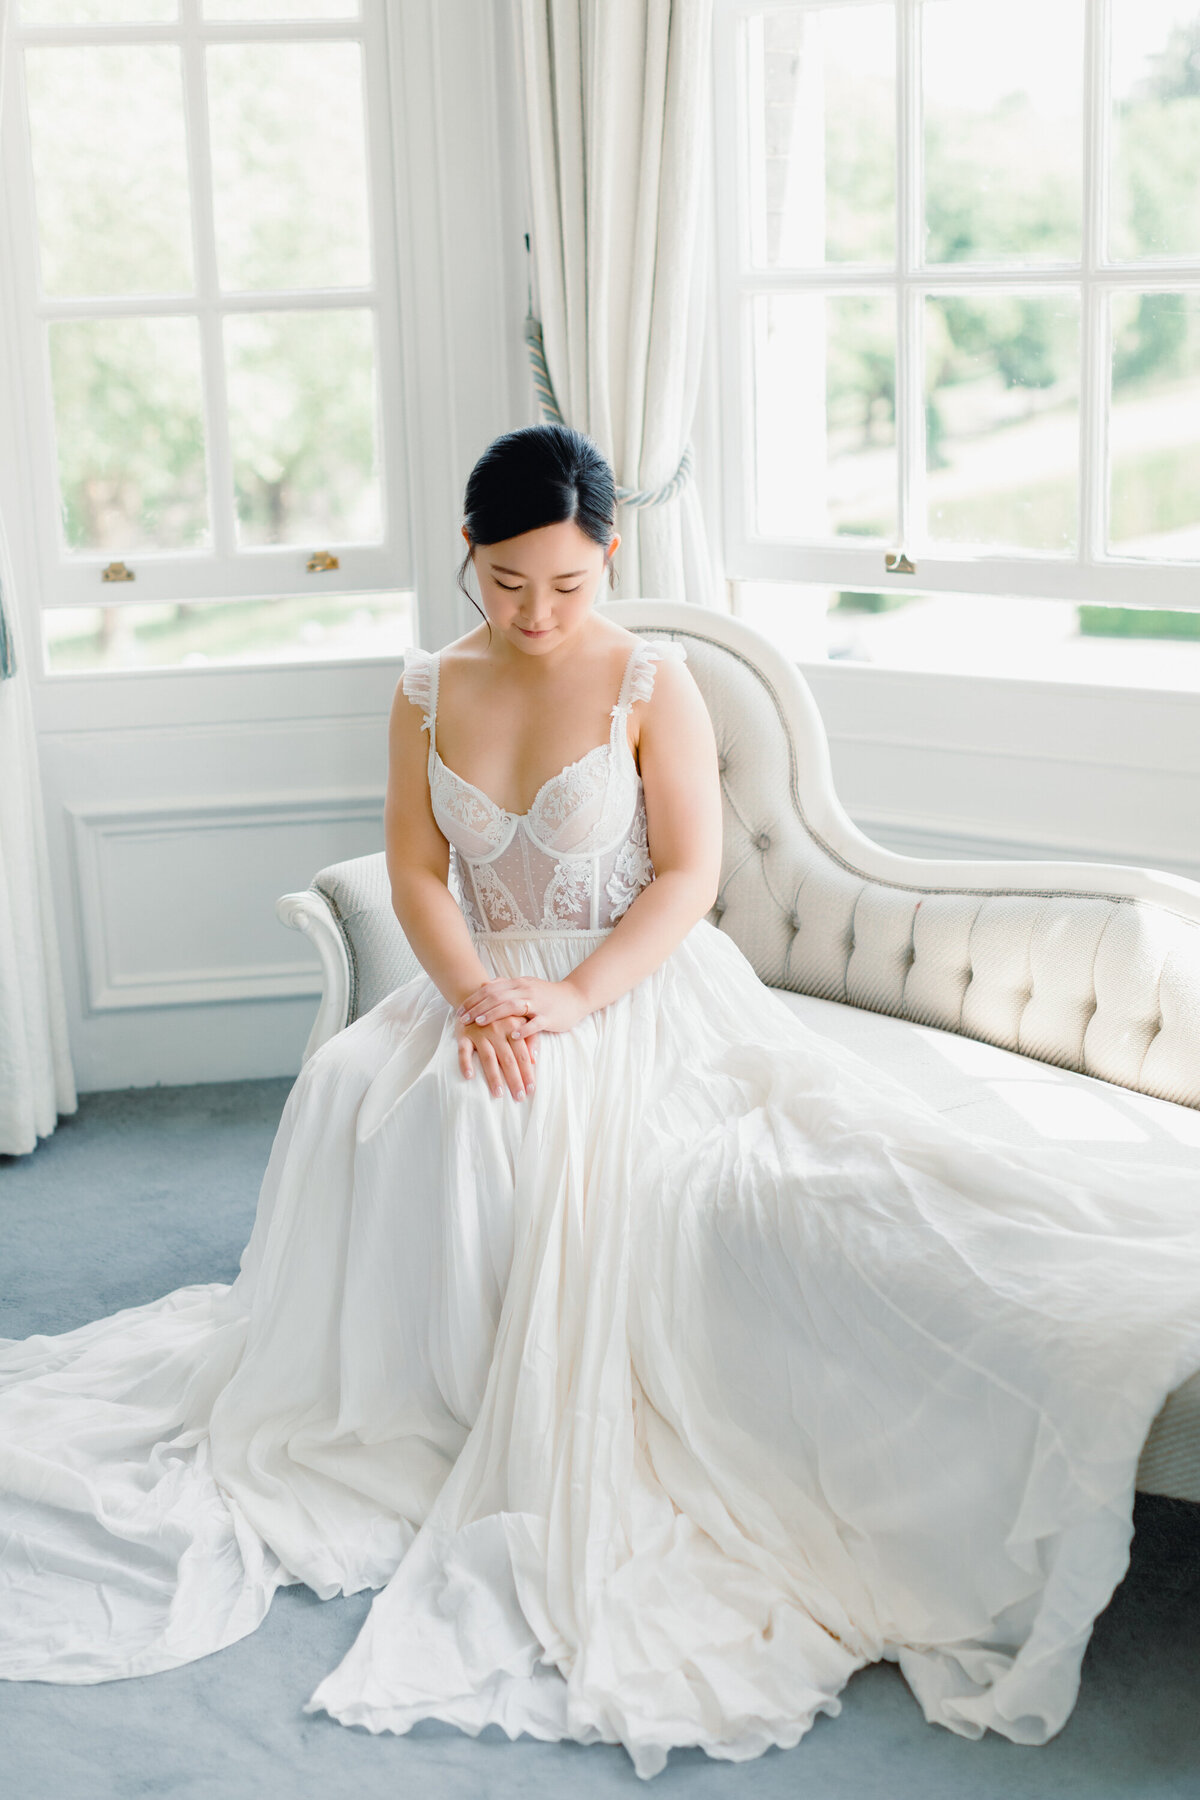 Hedsor-House-Editorial-Wedding-Photographer-Colette-Aurelia-3